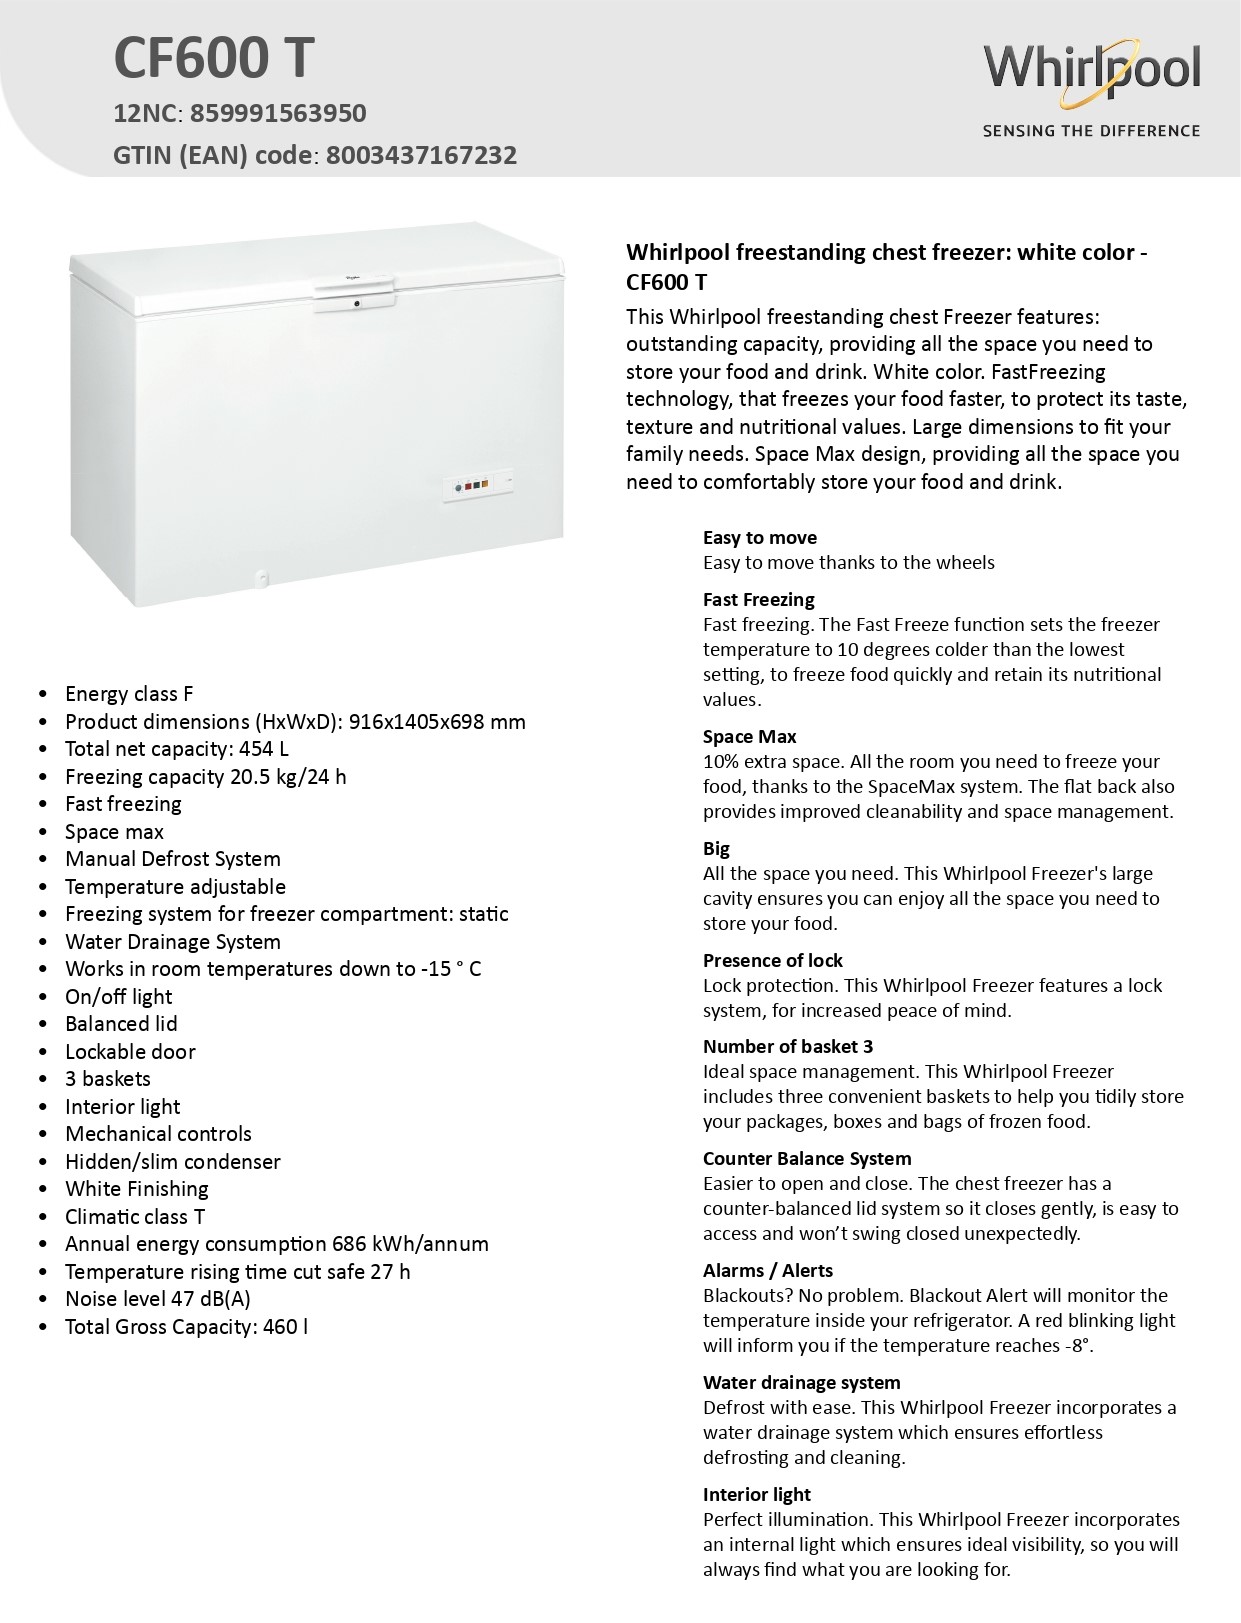 Whirlpool CF600T | Chest Freezer 